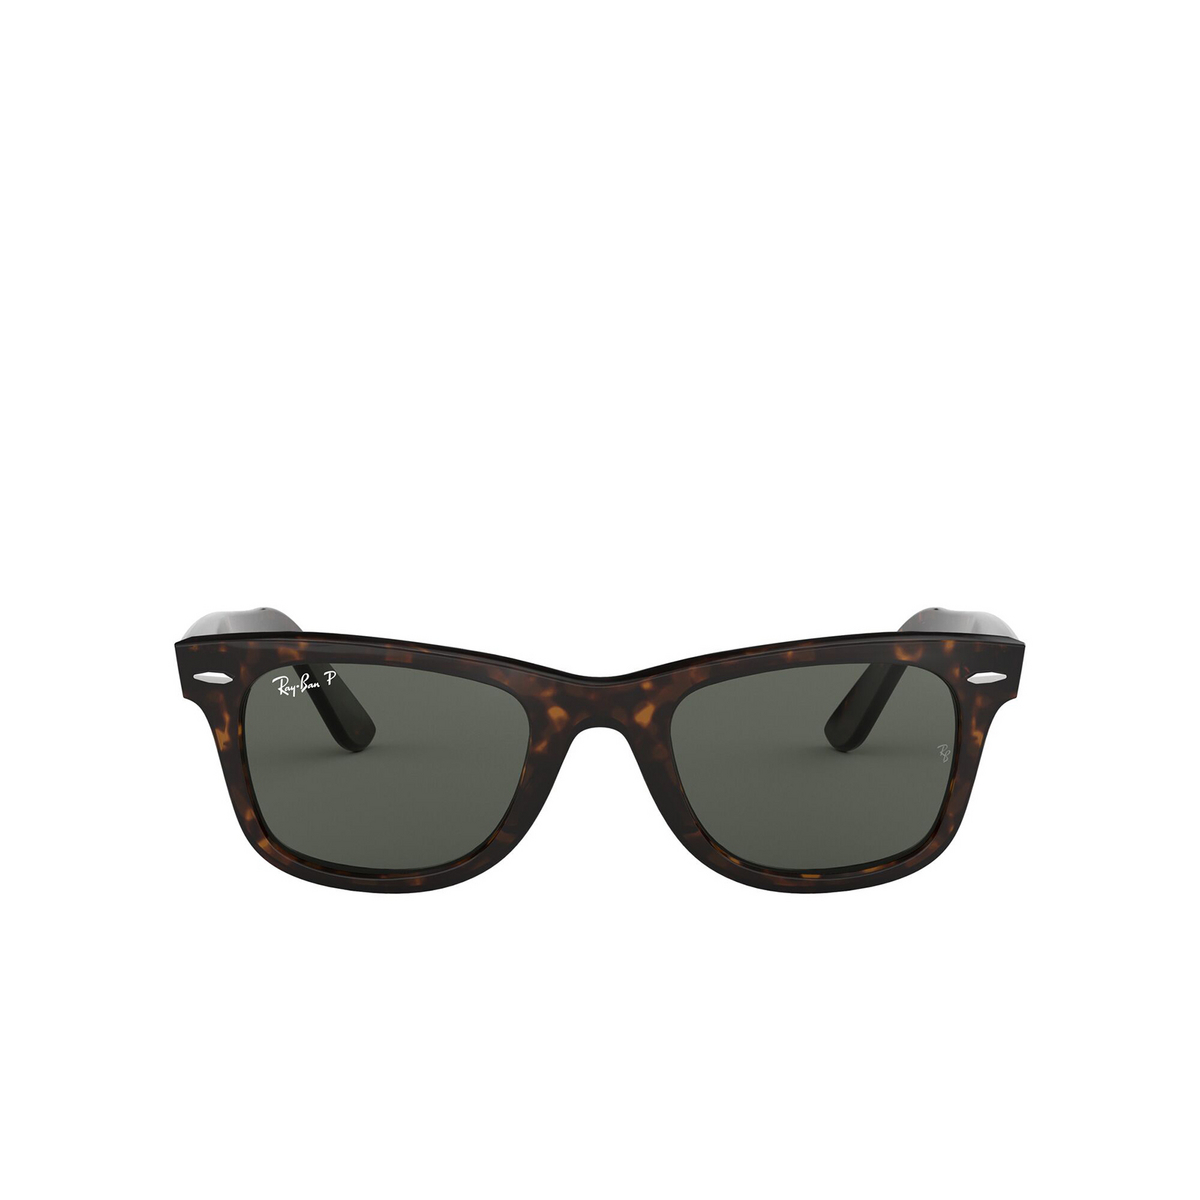 Ray-Ban WAYFARER Sunglasses 902/58 Tortoise - front view